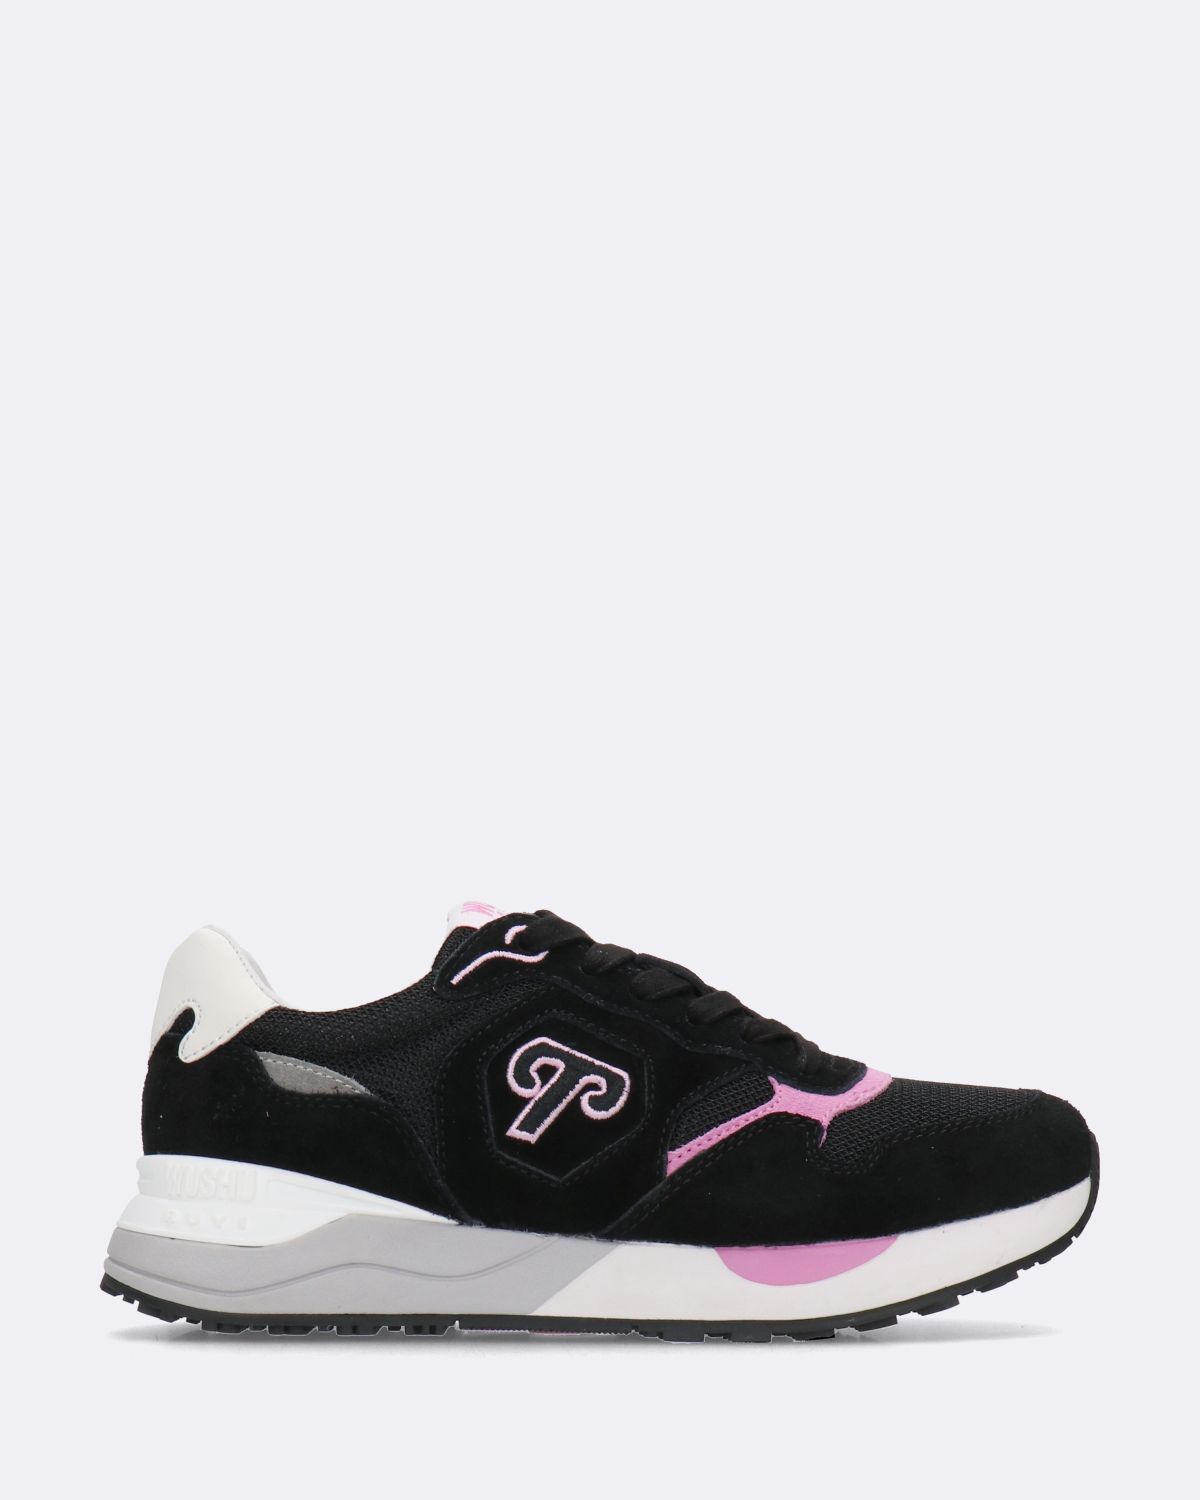 Sneakers One nera e rosa